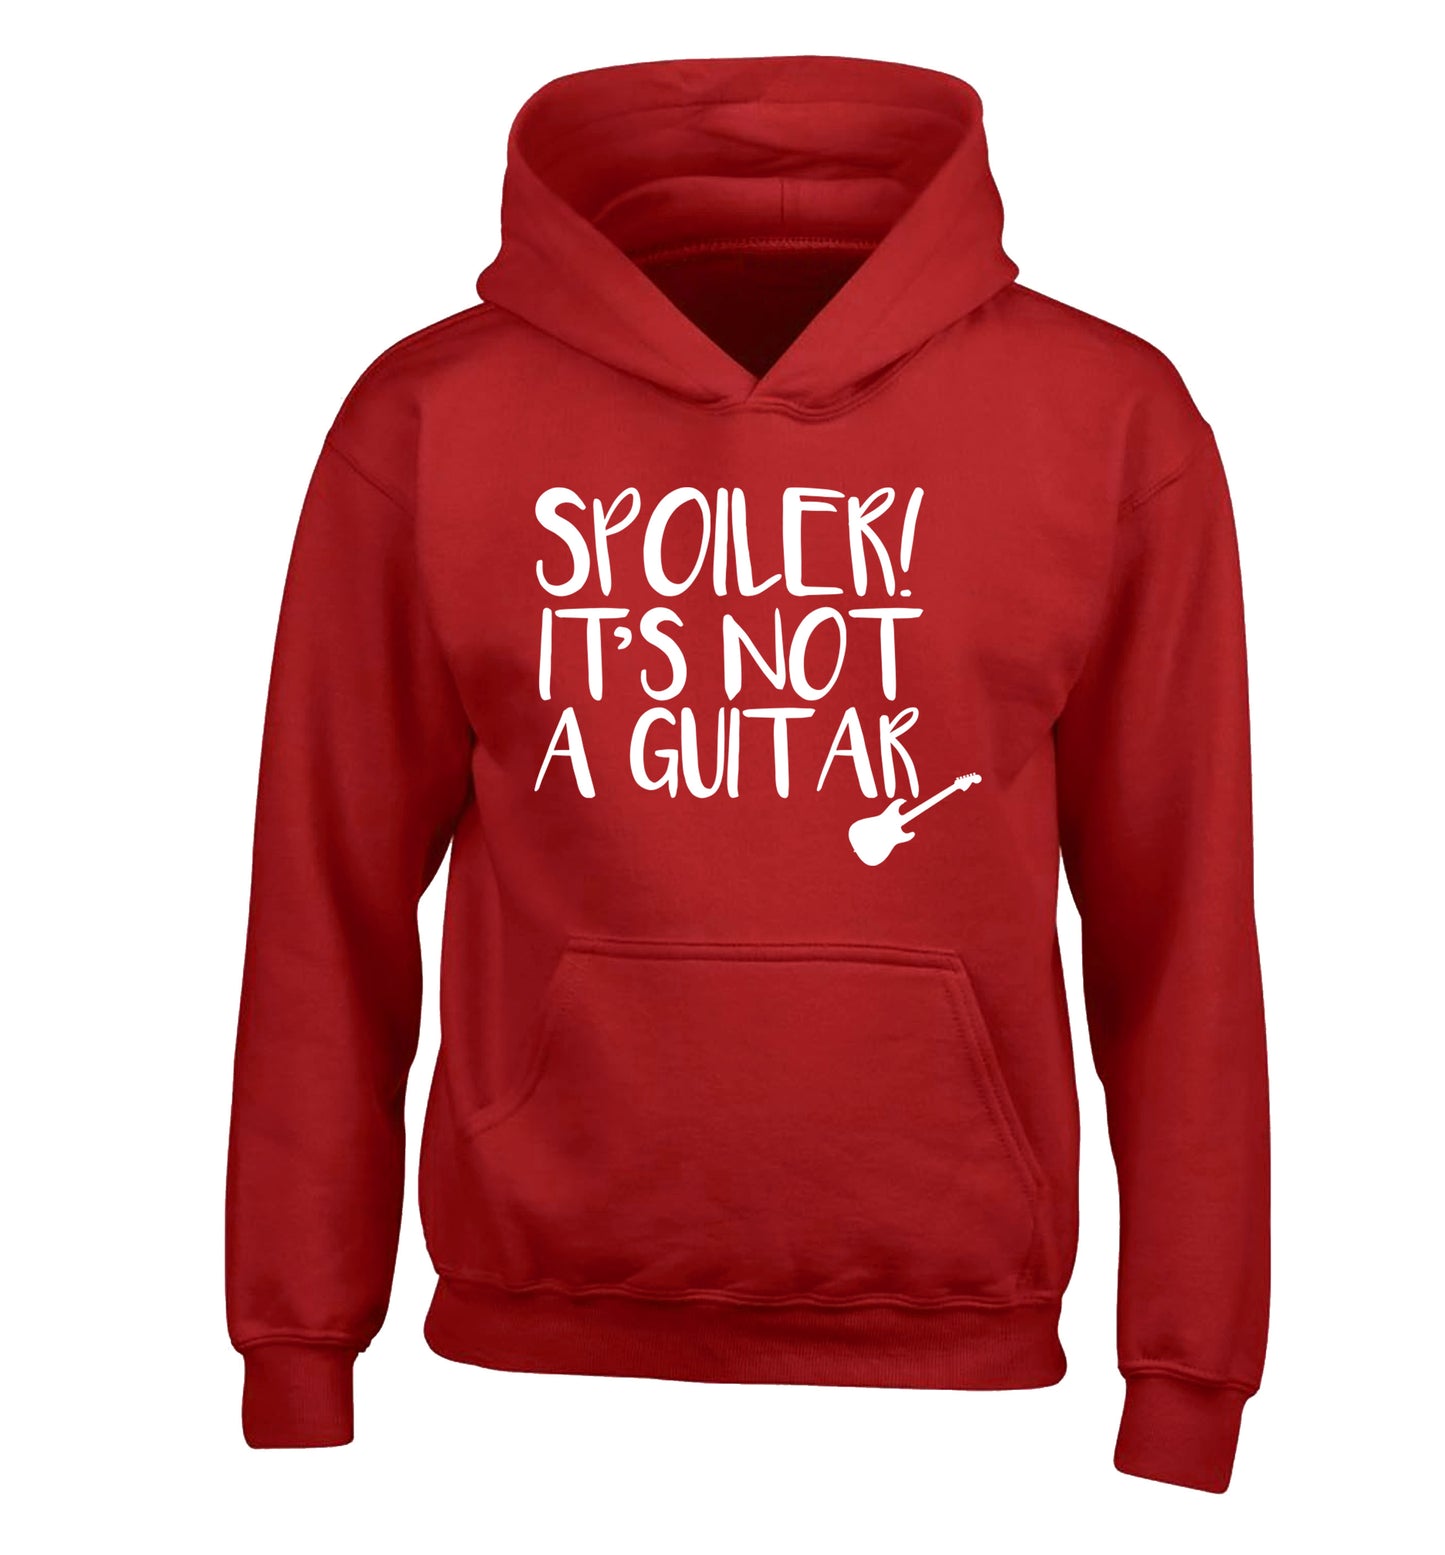 Spoiler it's not a guitar children's red hoodie 12-13 Years